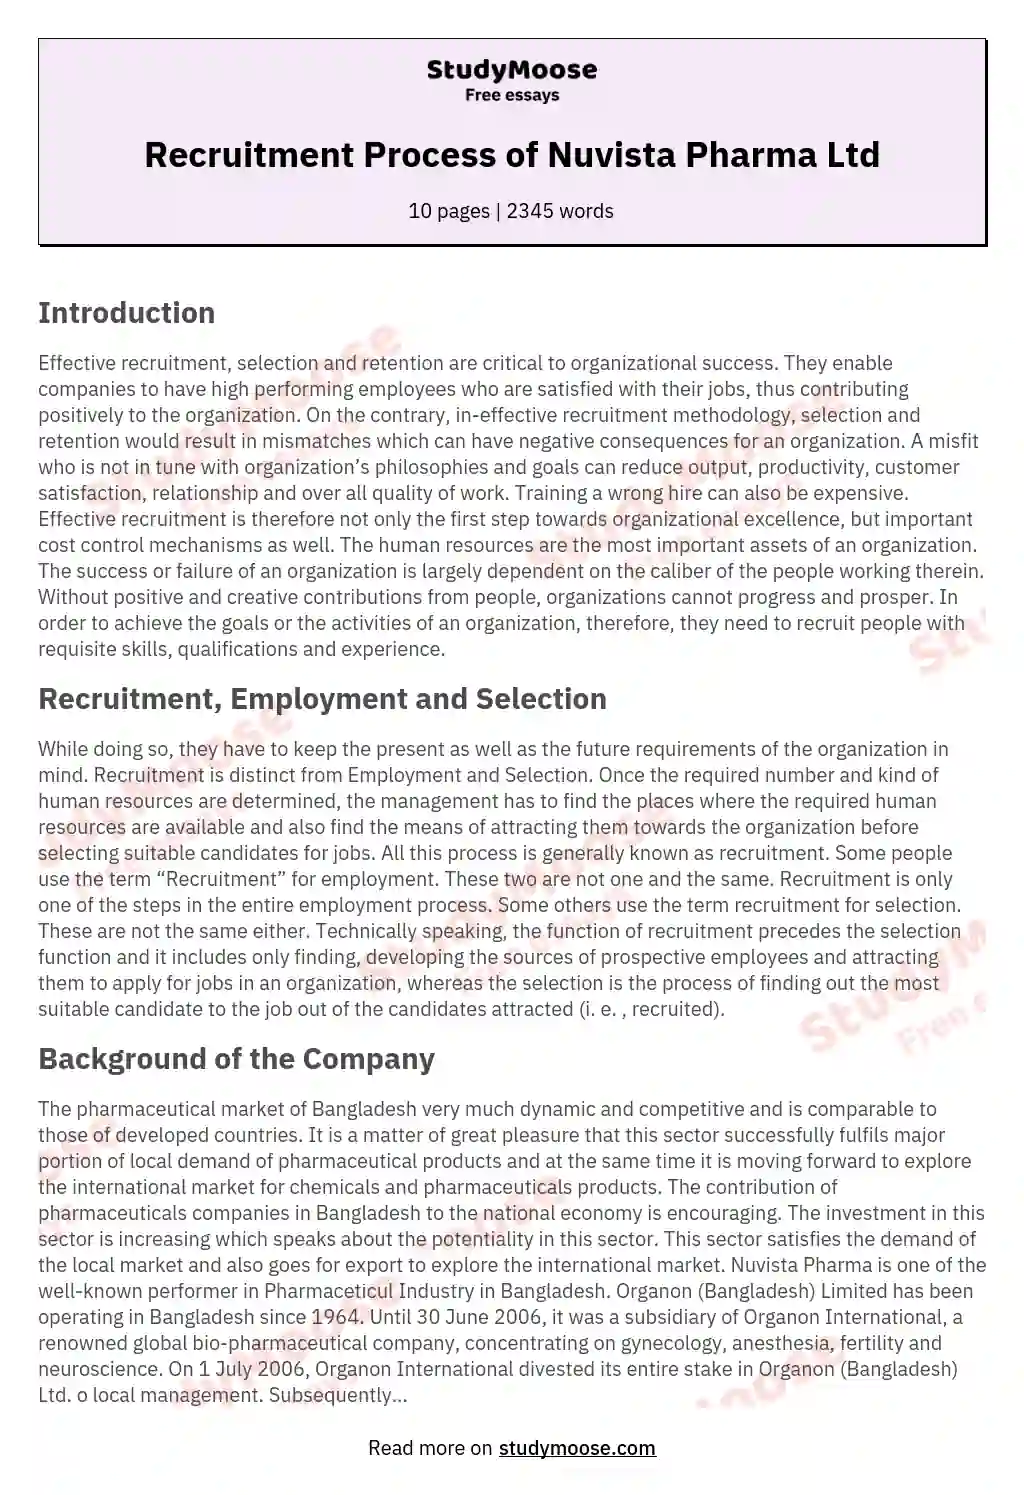 Recruitment Process of Nuvista Pharma Ltd essay